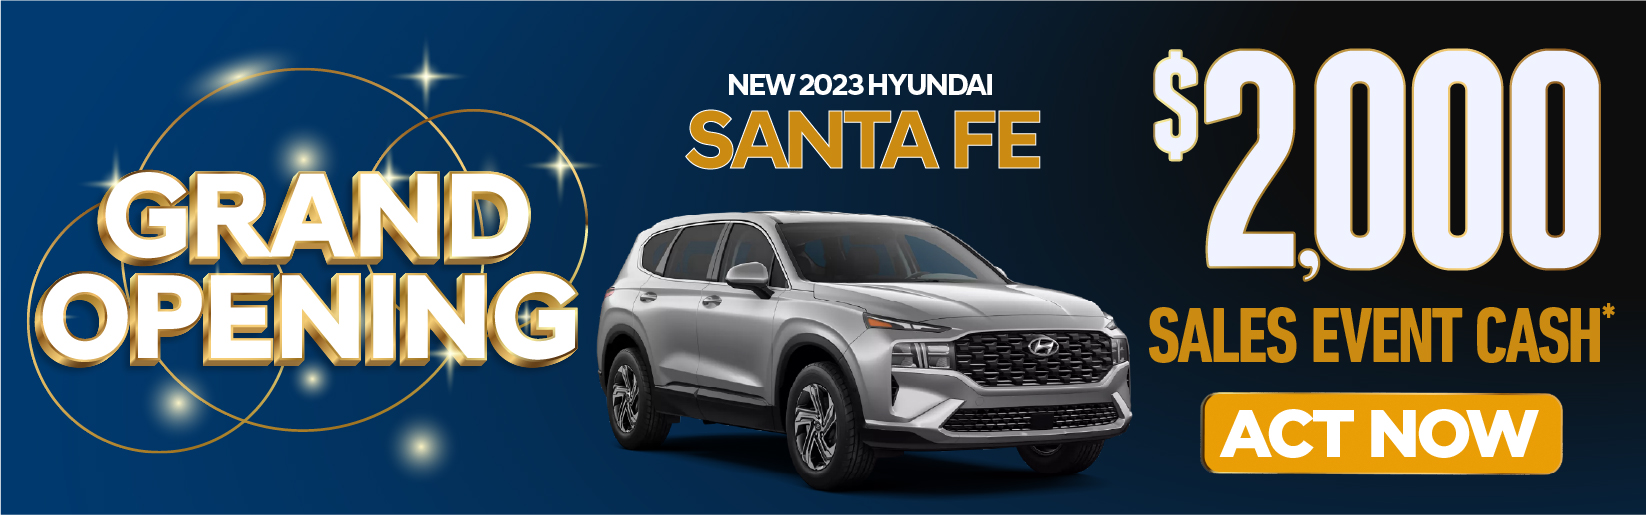 New 2023 Hyundai Santa FE - $2000 Sales Event Cash* - Act Now